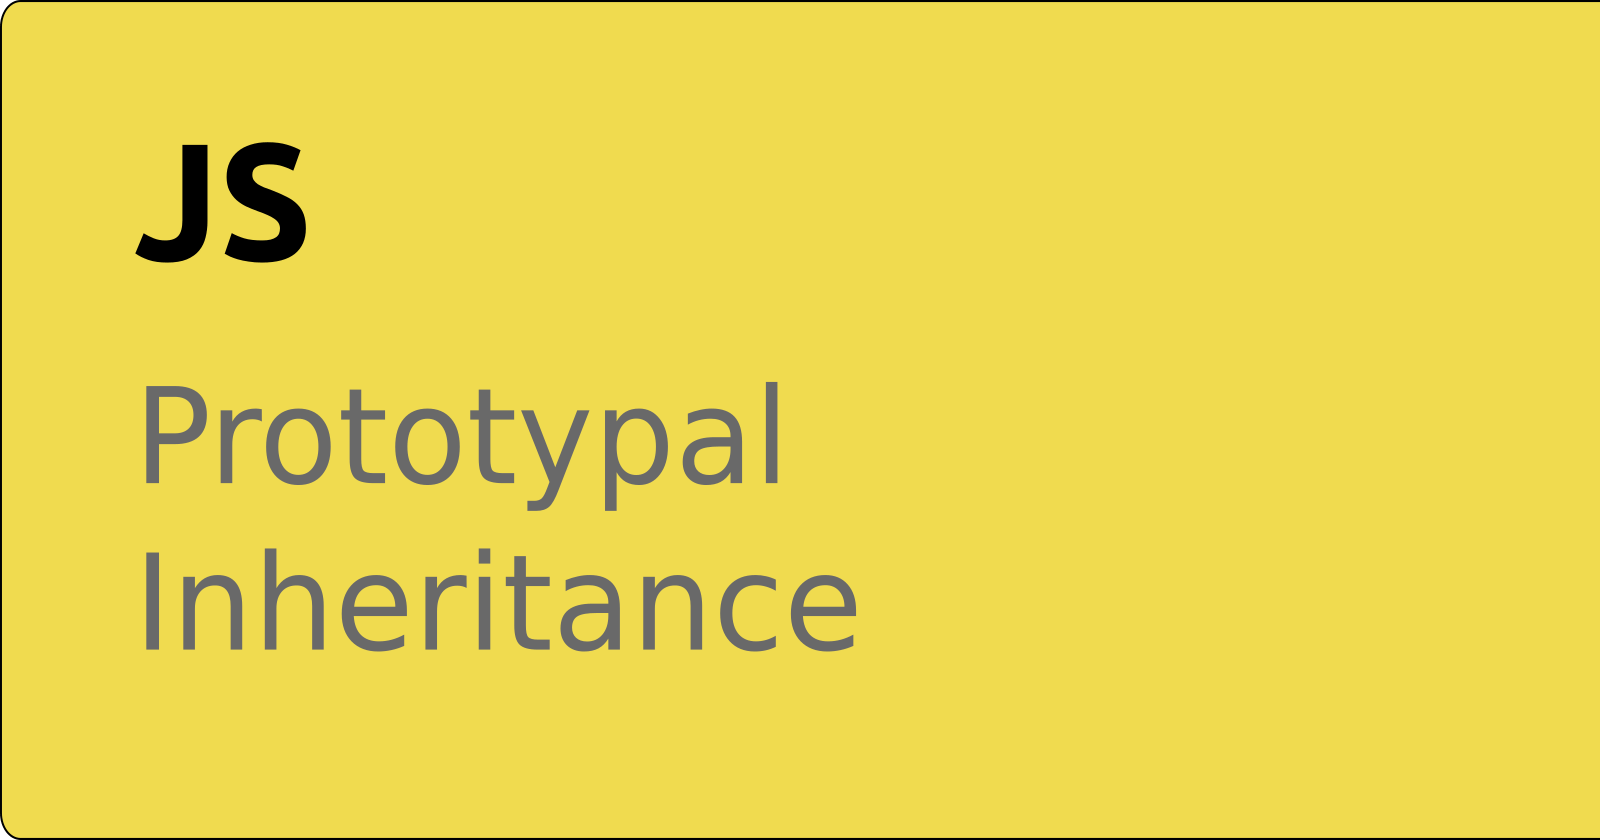 2. Prototypal Inheritance